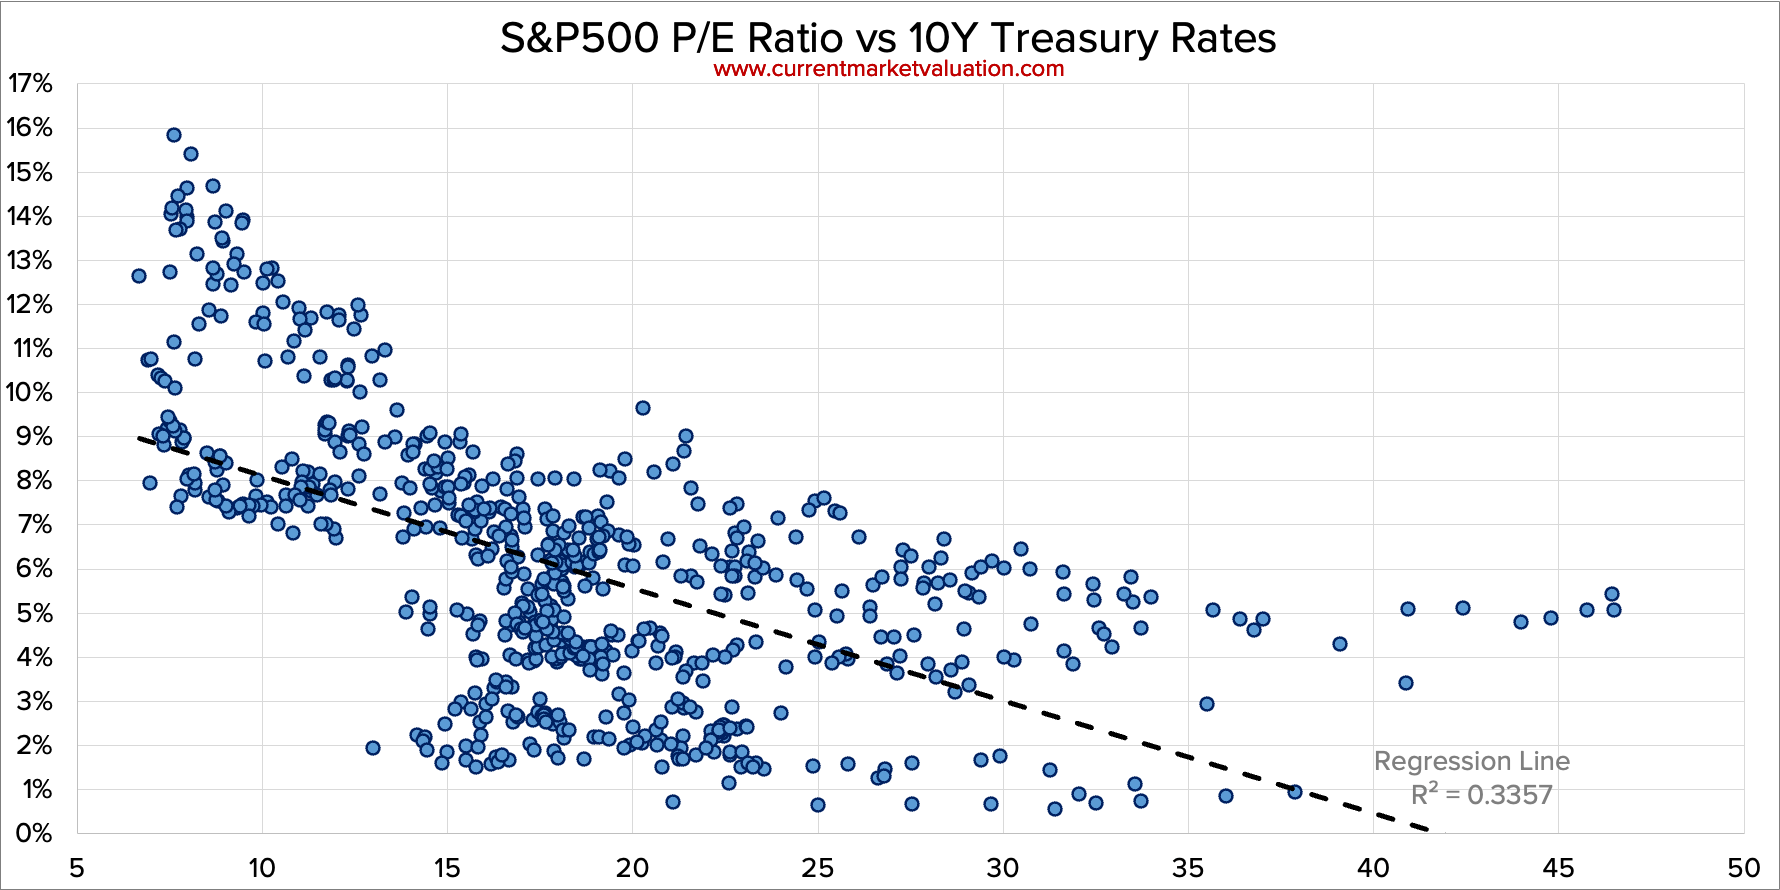 Scatterplot of S&P500 P/E Ratio and 10Y Treasury Bond Rates